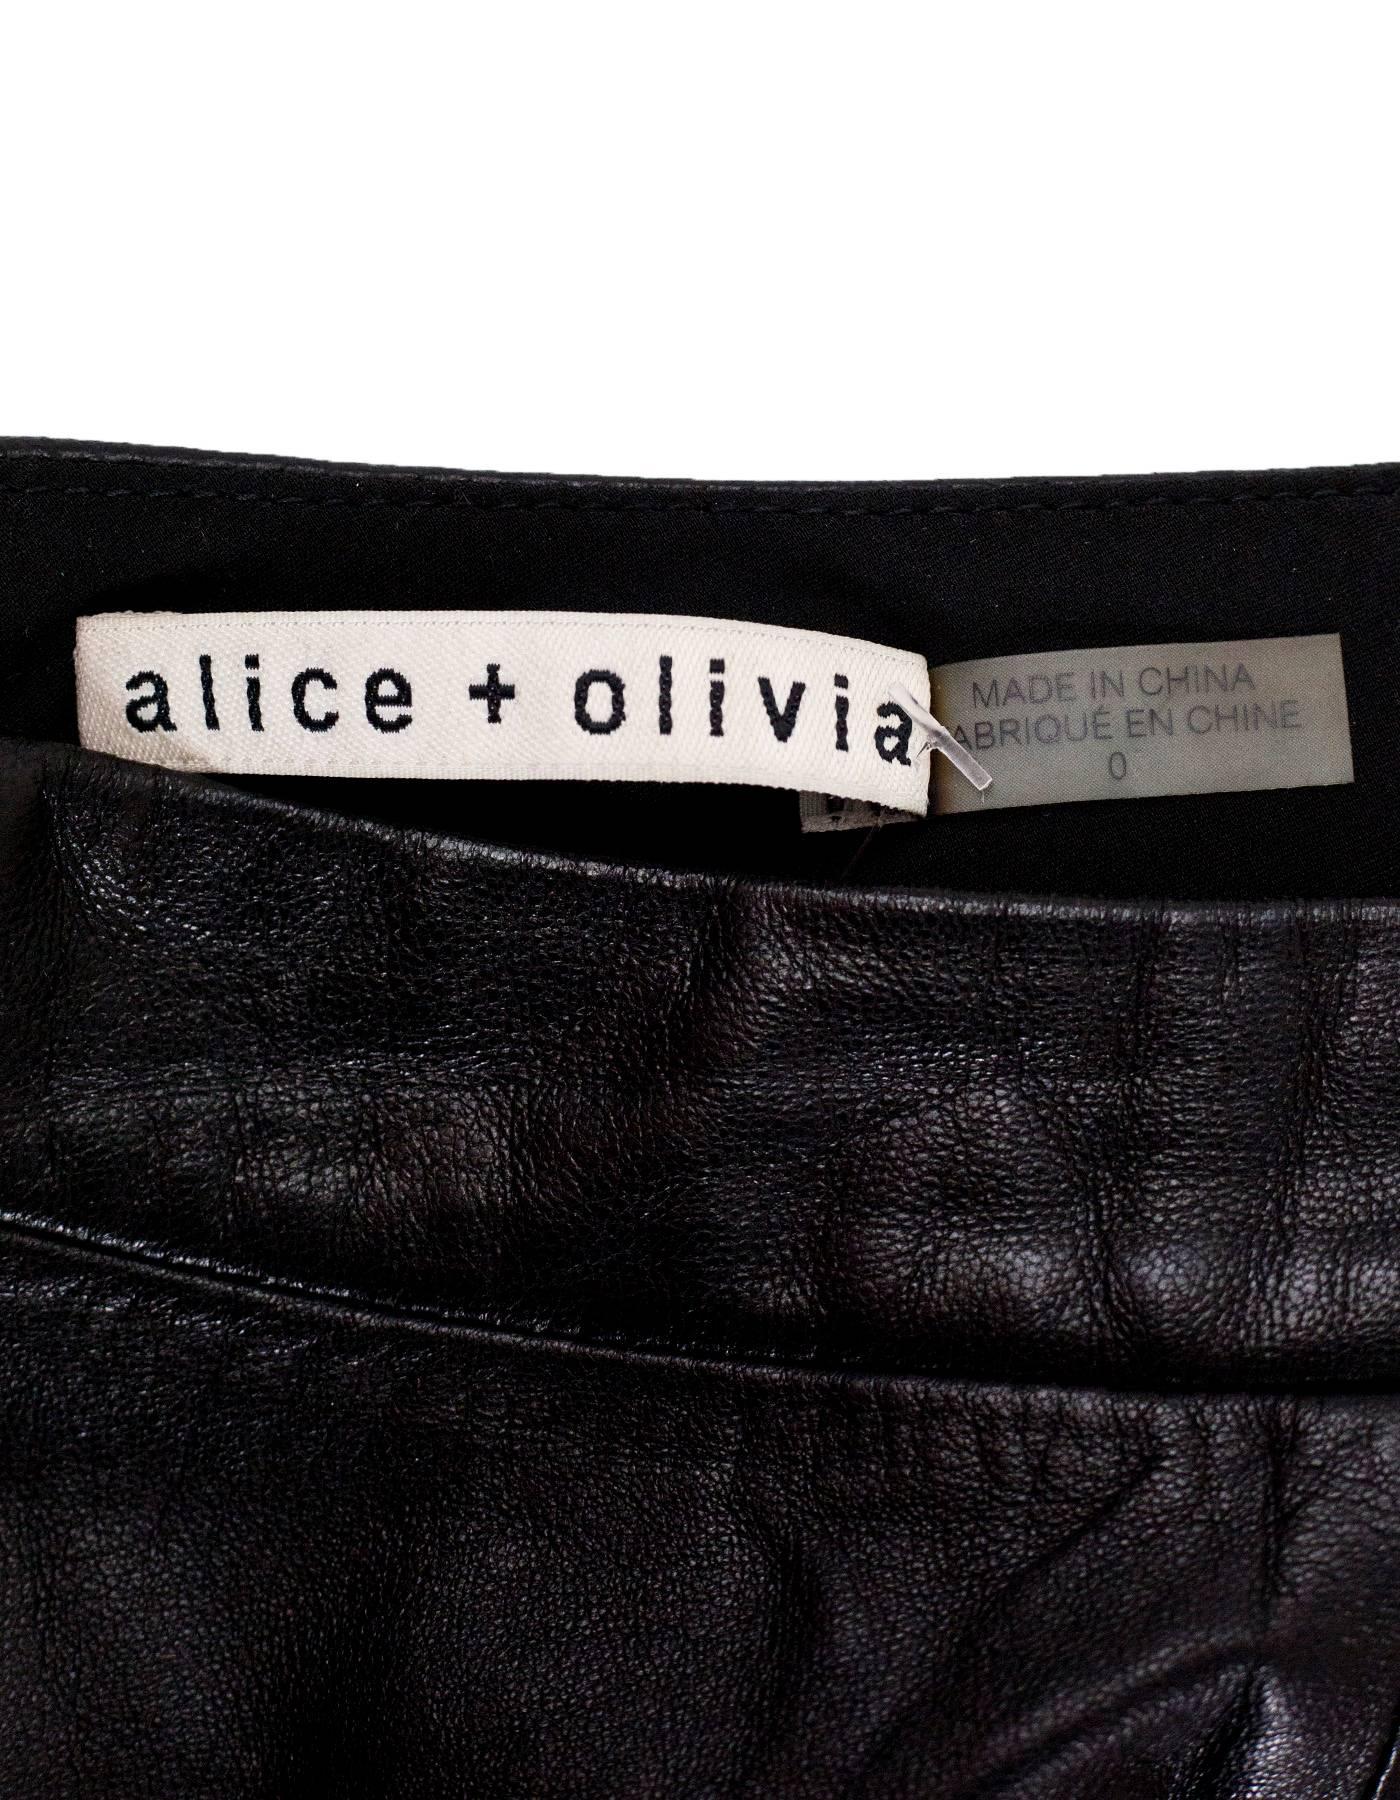 alice and olivia black leather skirt